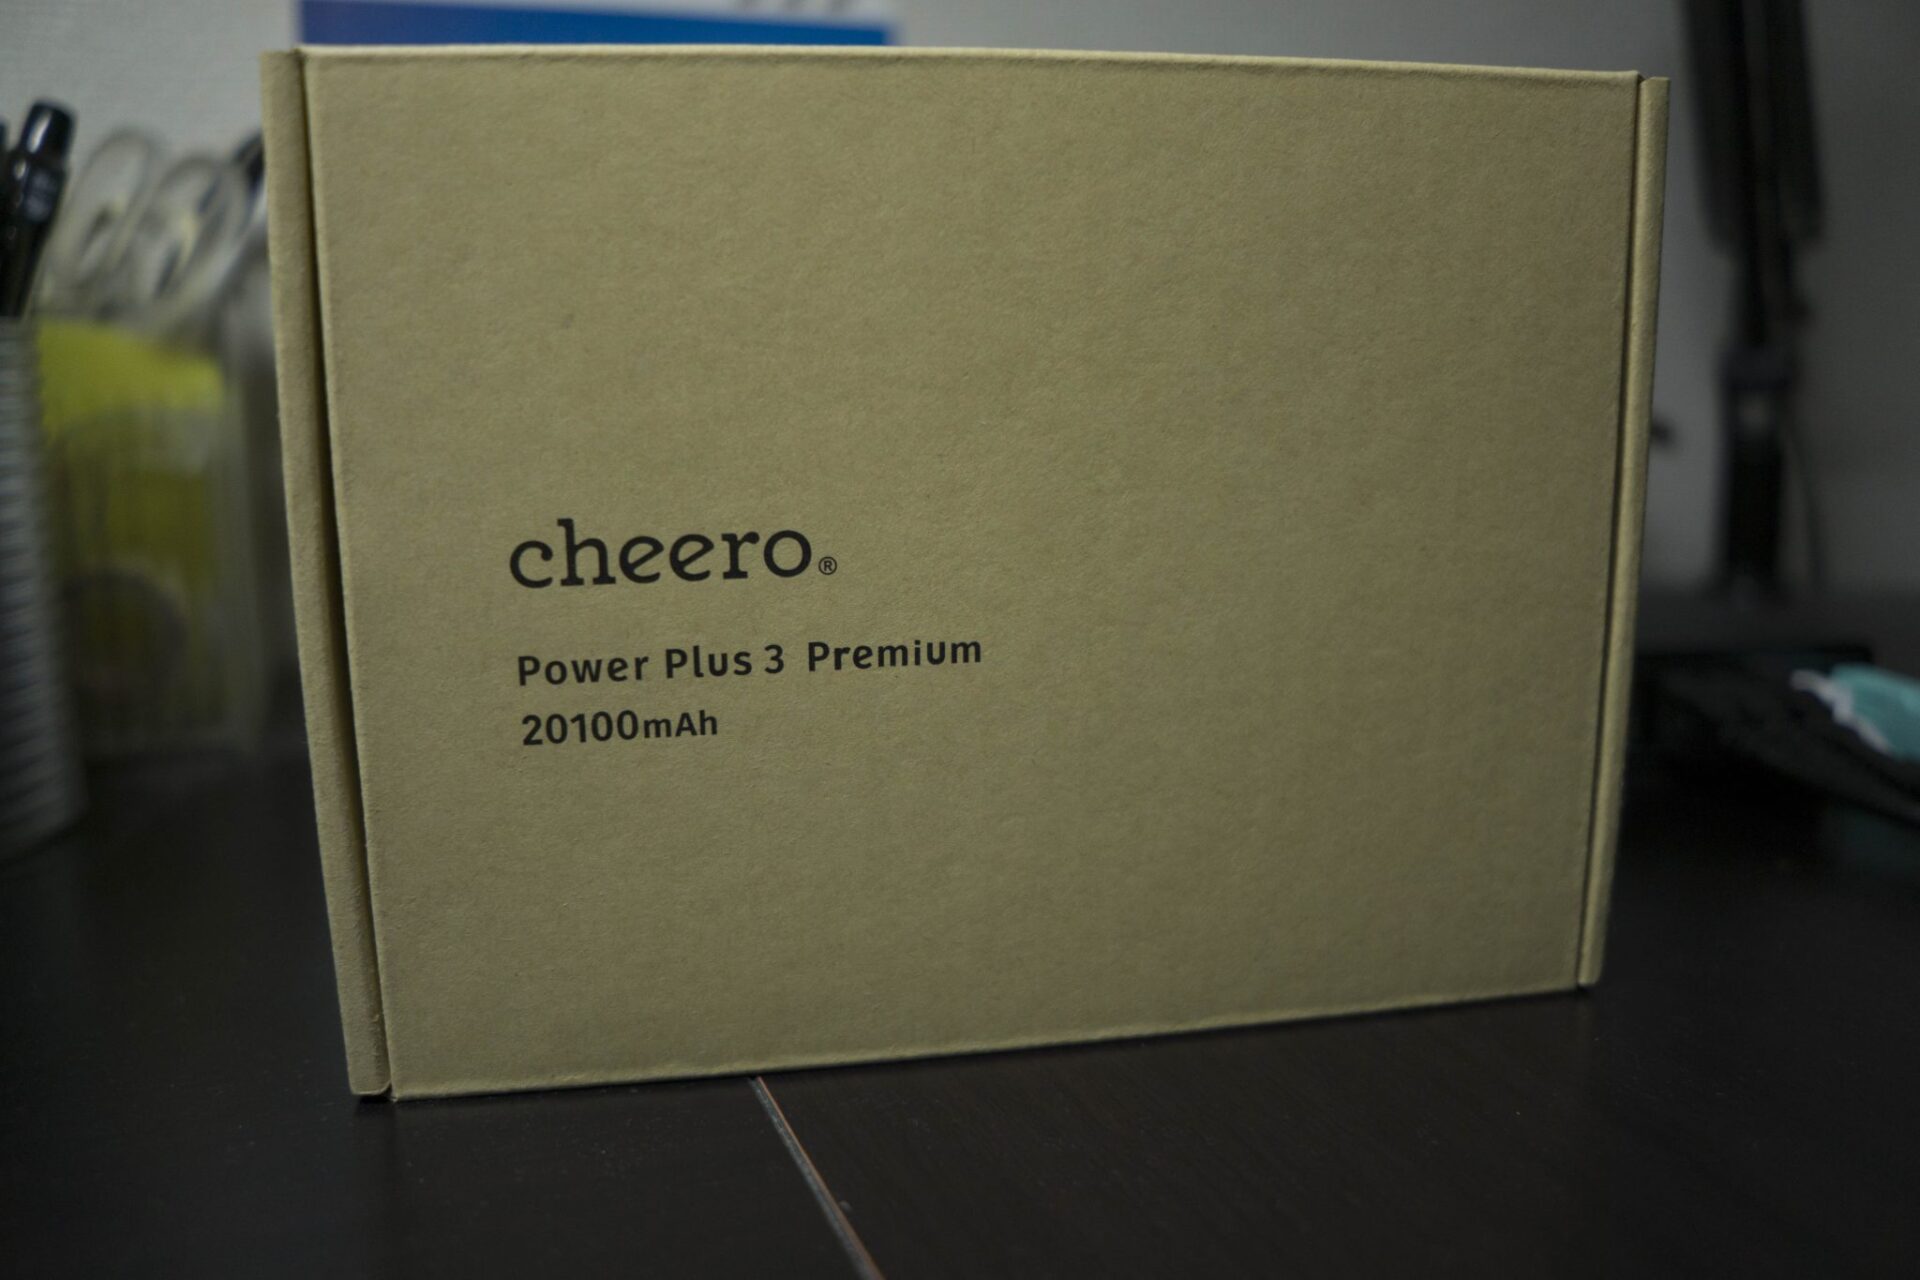 cheero Power Plus 3 Premium 20100mAh